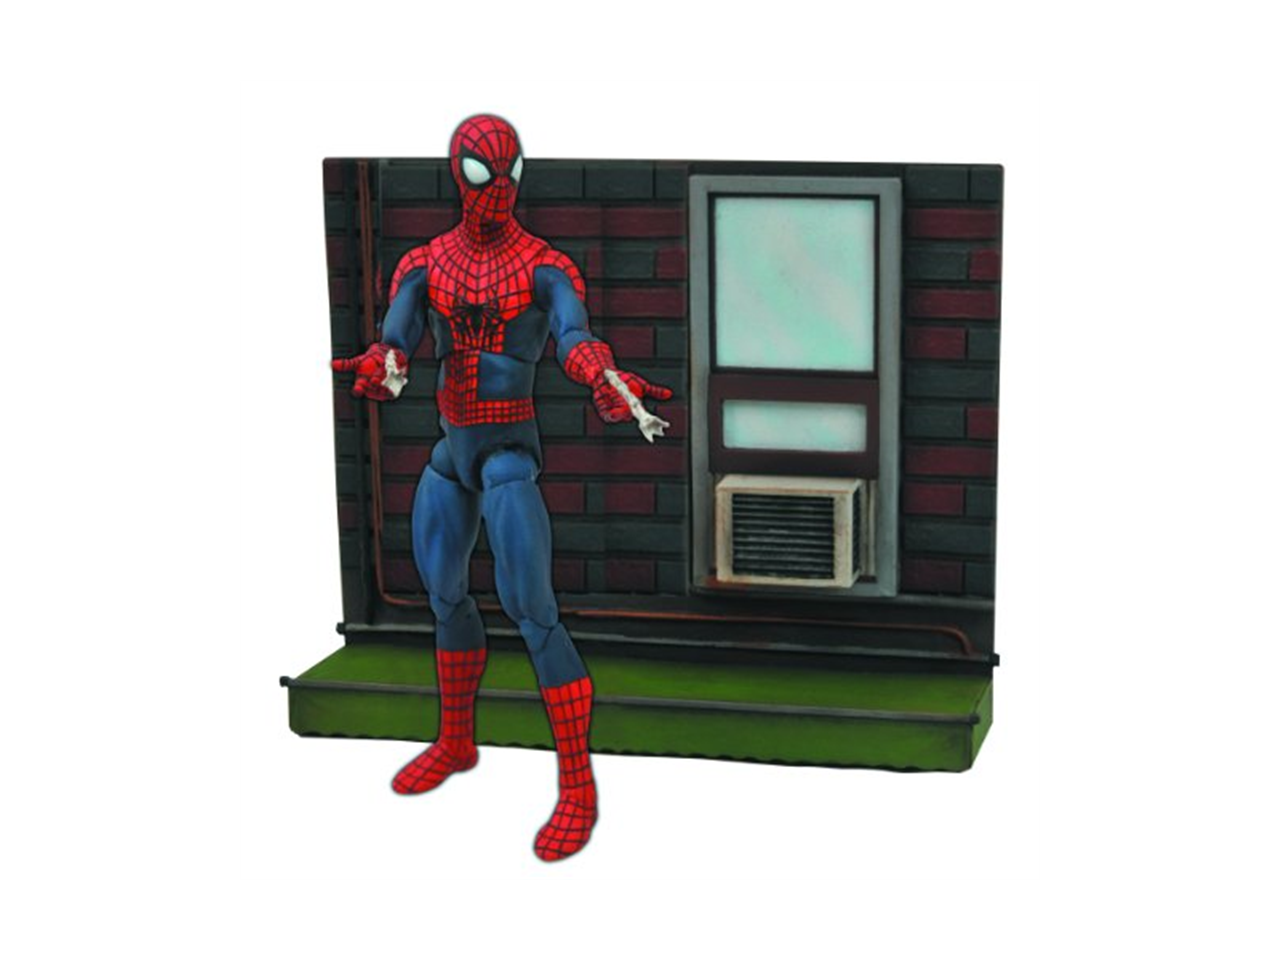 marvel select amazing spider man 2